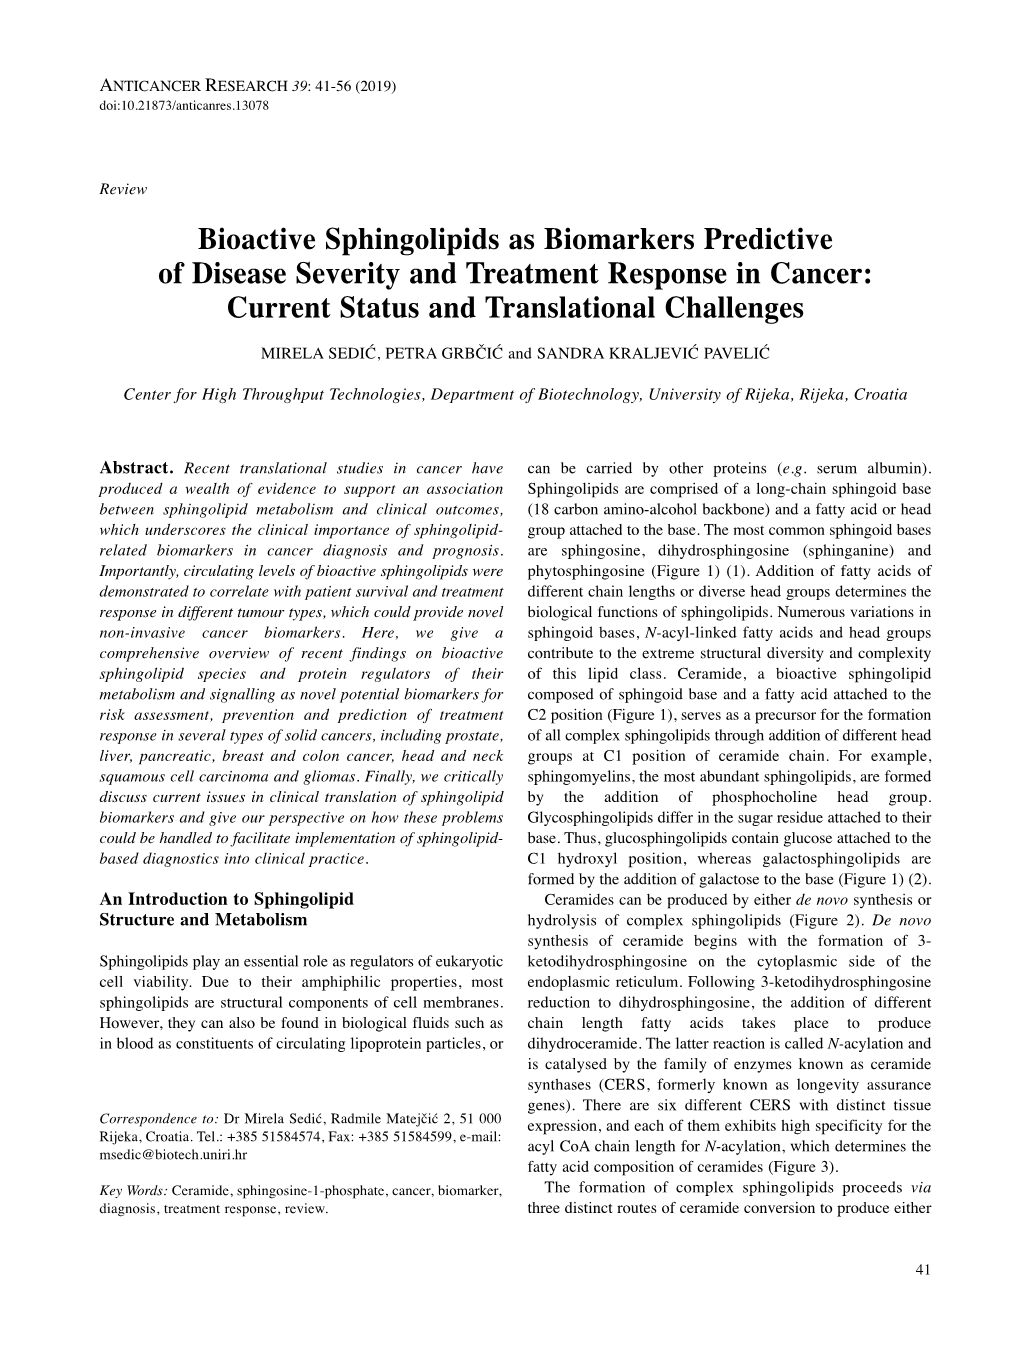 Bioactive Sphingolipids As Biomarkers Predictive